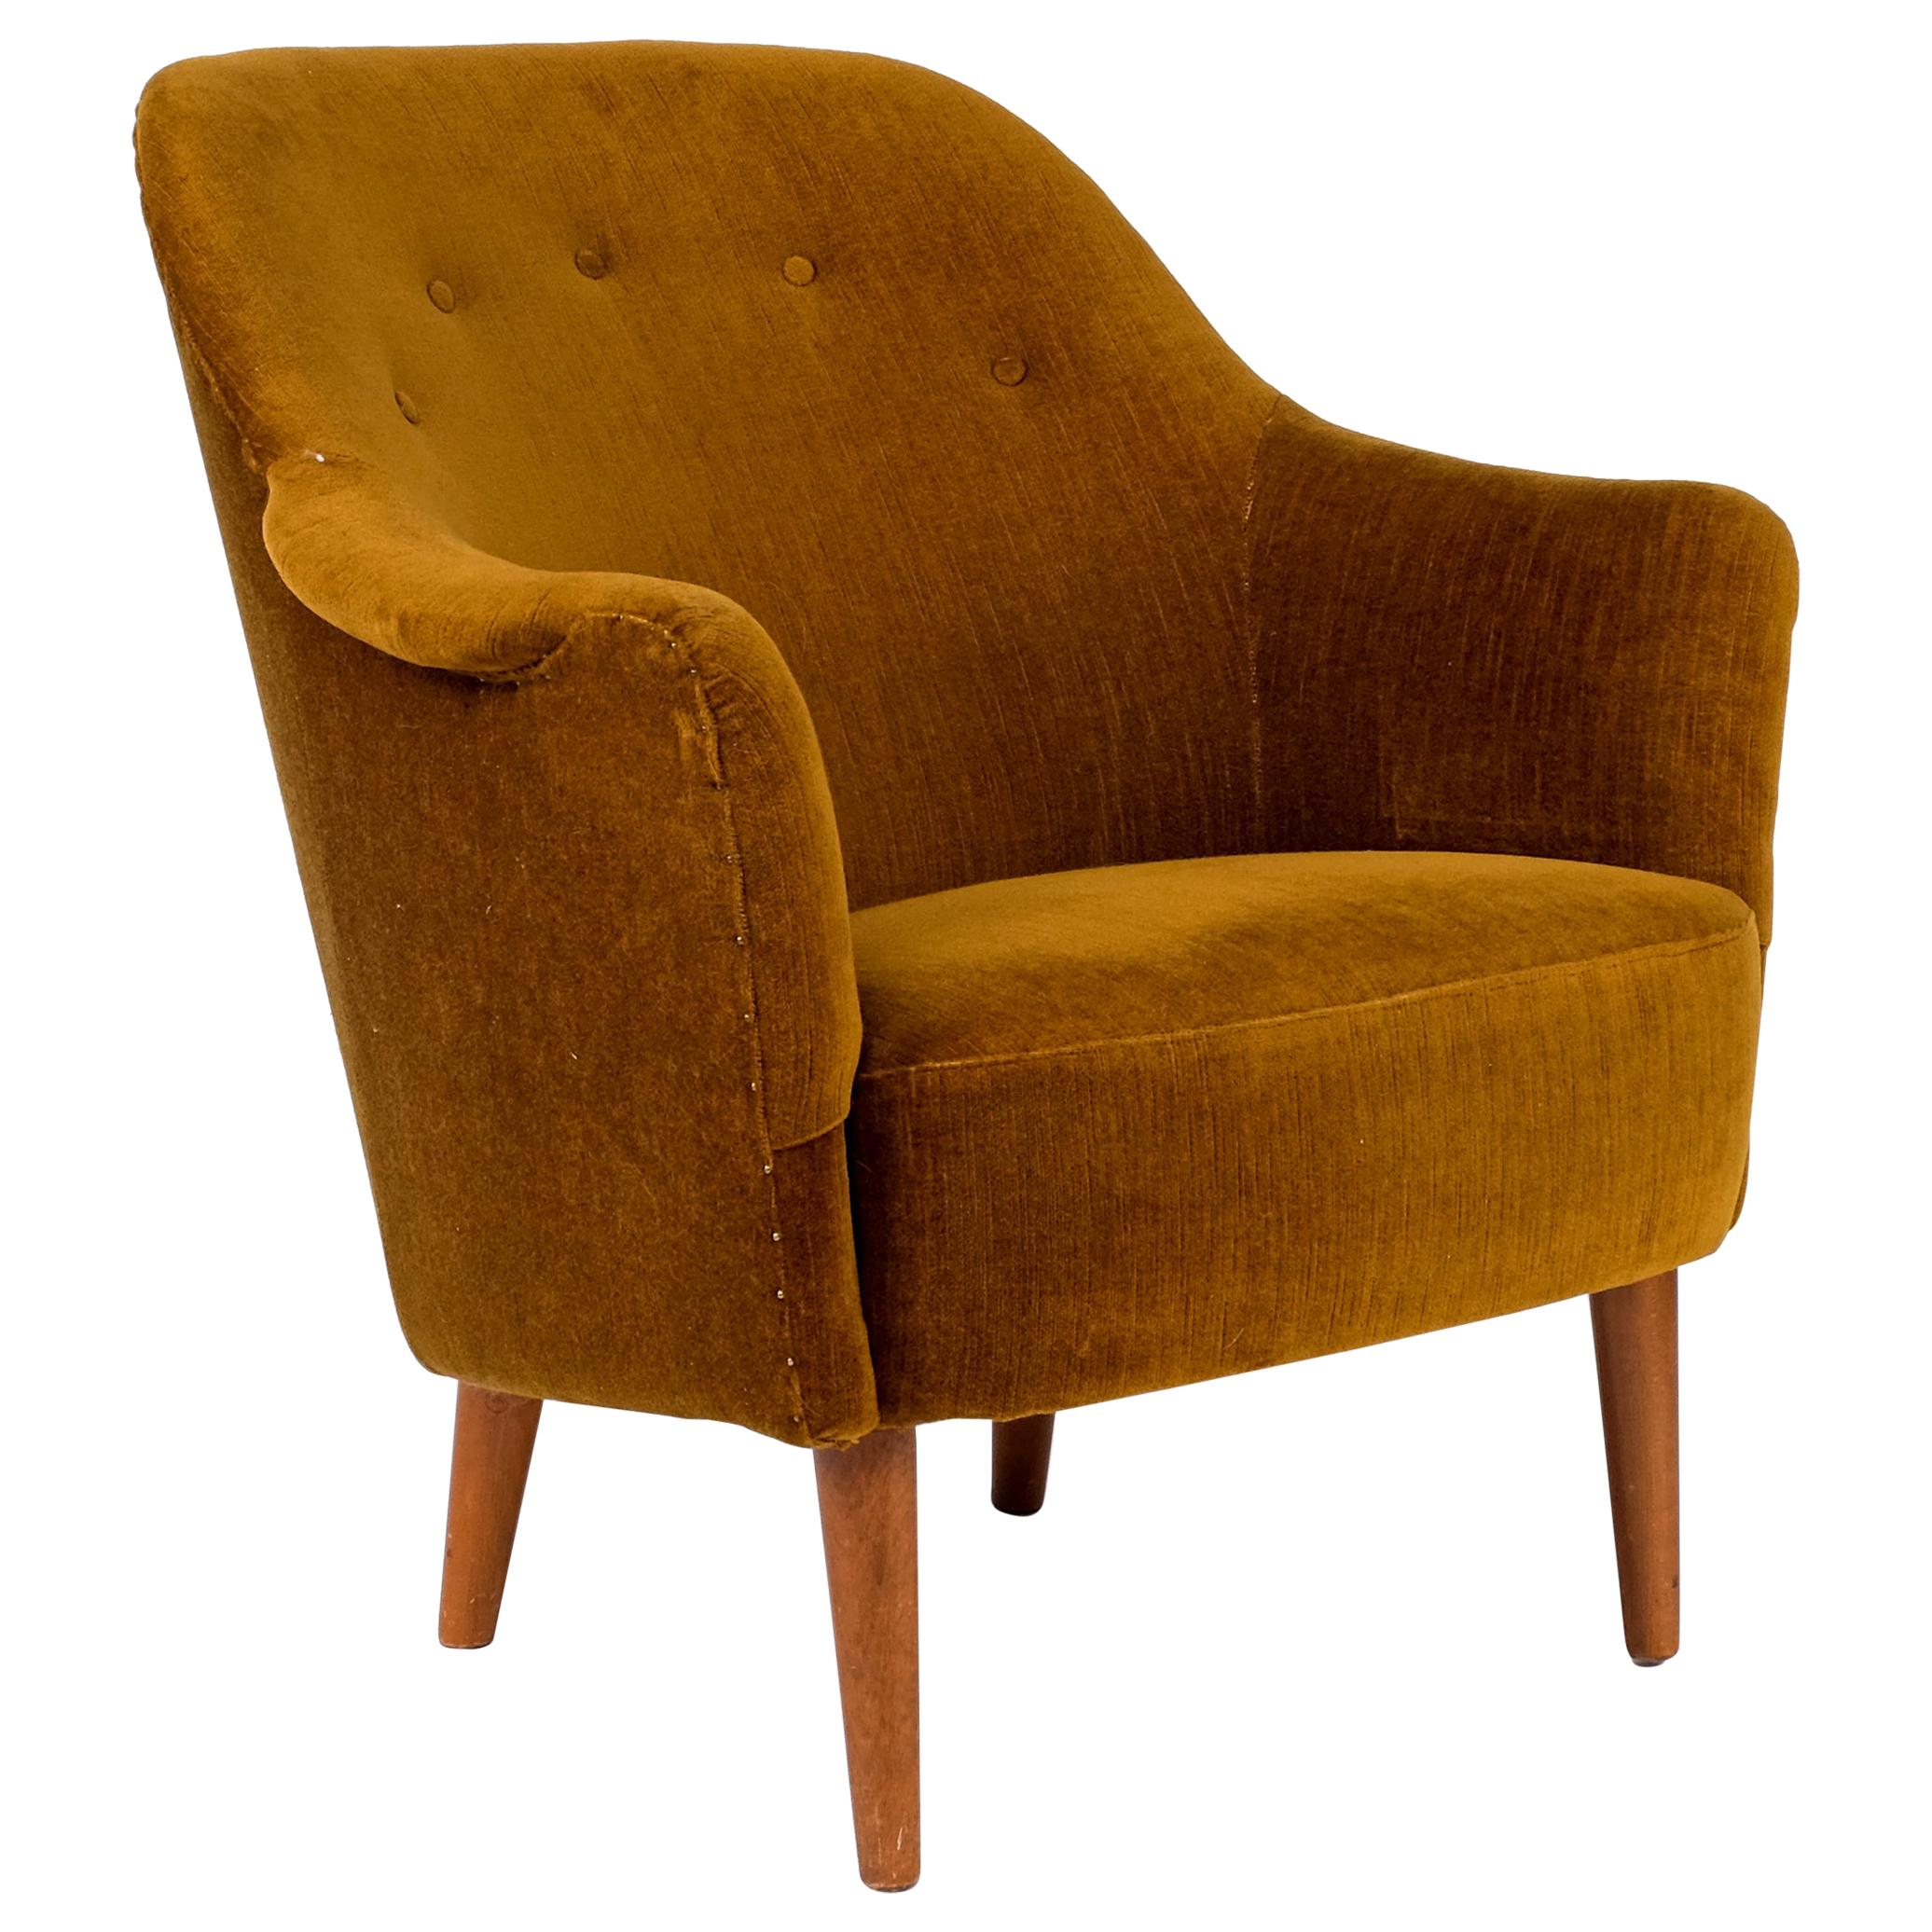 Carl Malmsten "Samspel" Lounge Chair, 1960s